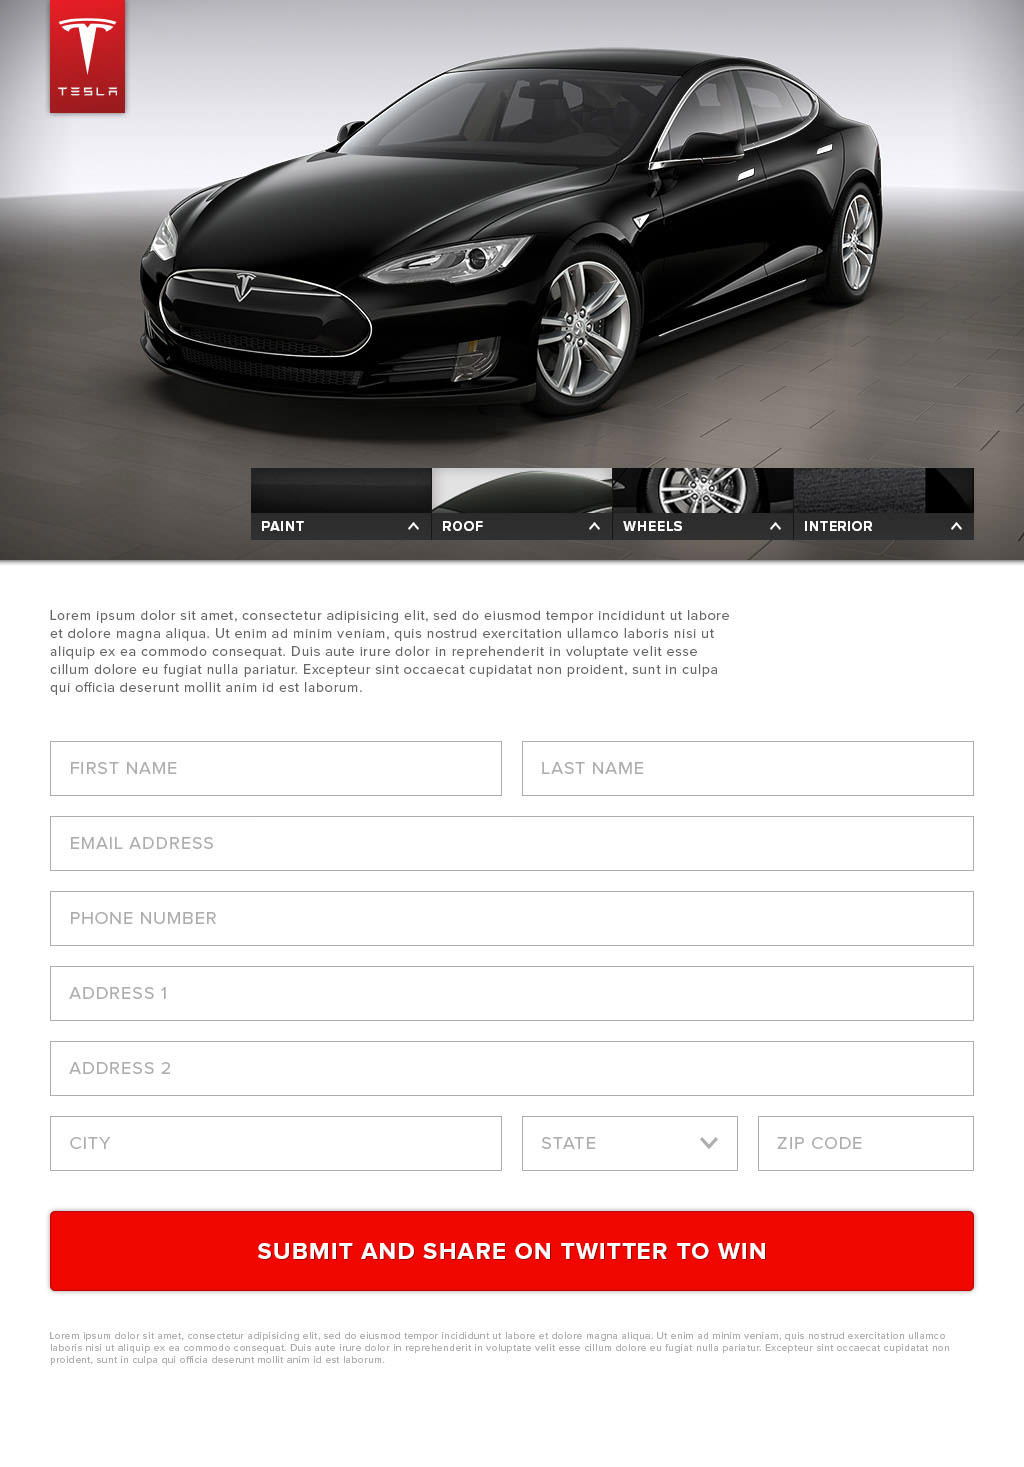 Homepage "build your custom Tesla" design for the Tesla promotional site